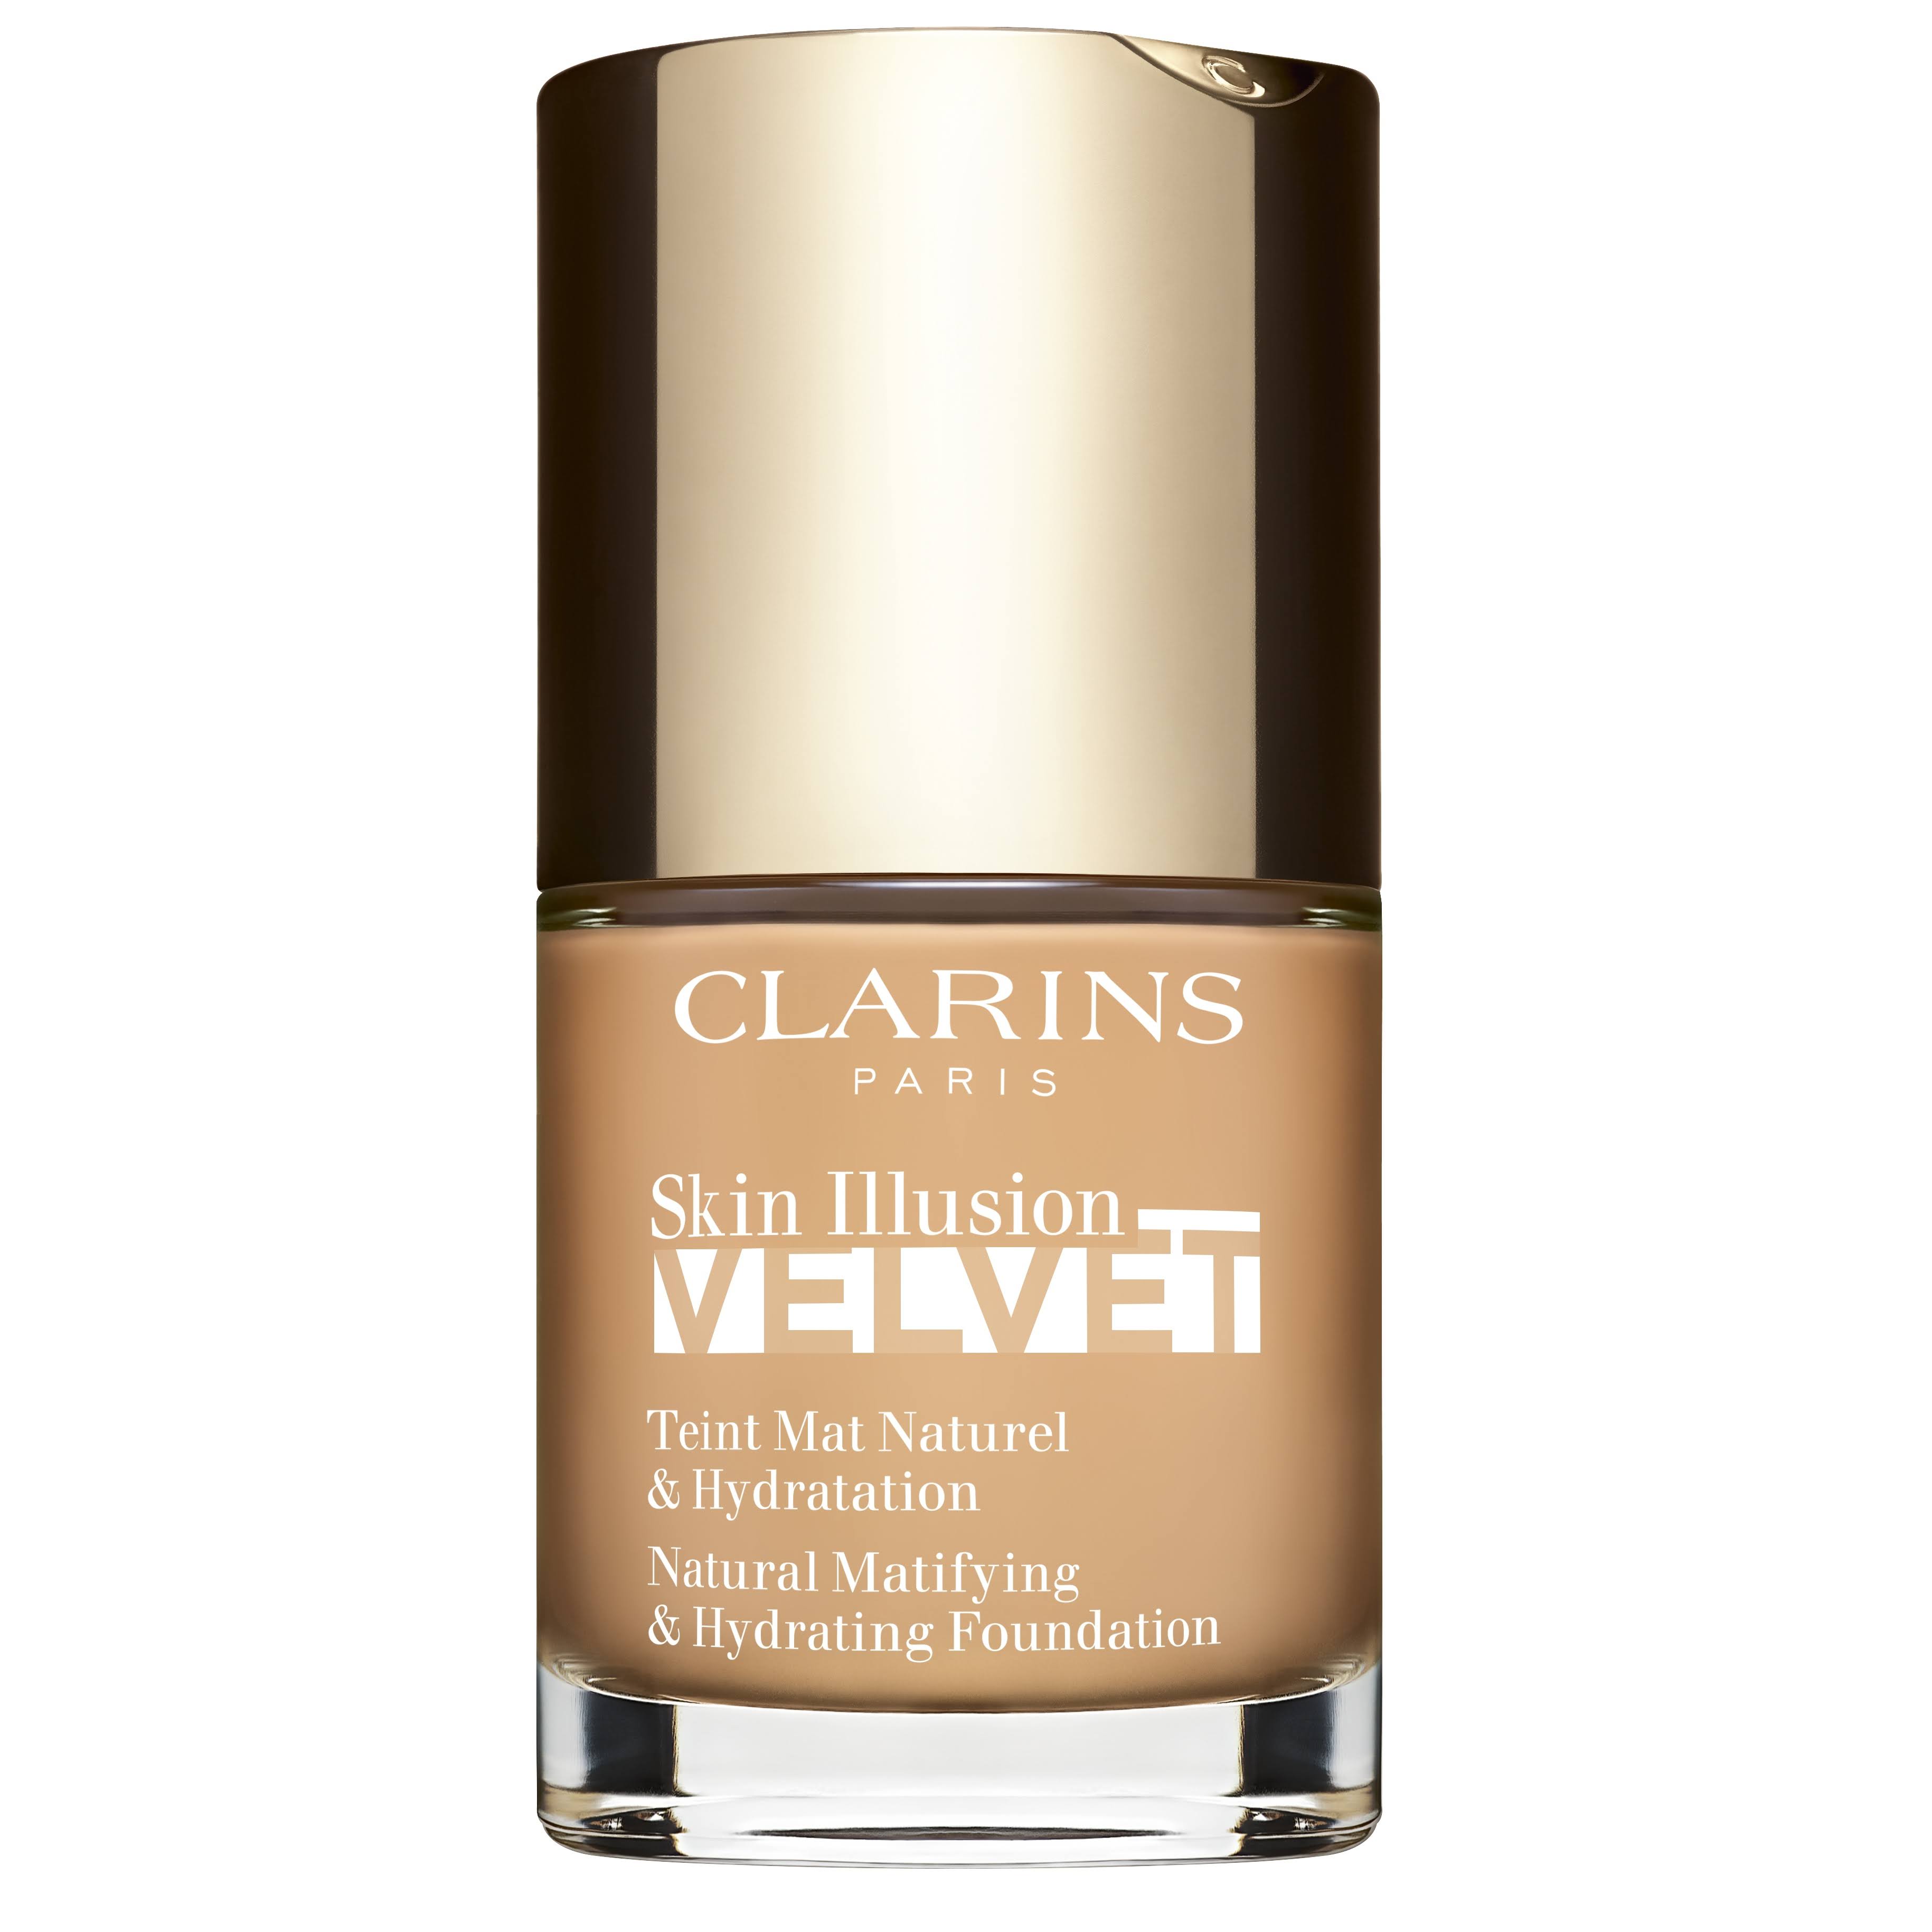 Clarins Skin Illusion Velvet Foundation - #108w 30ml